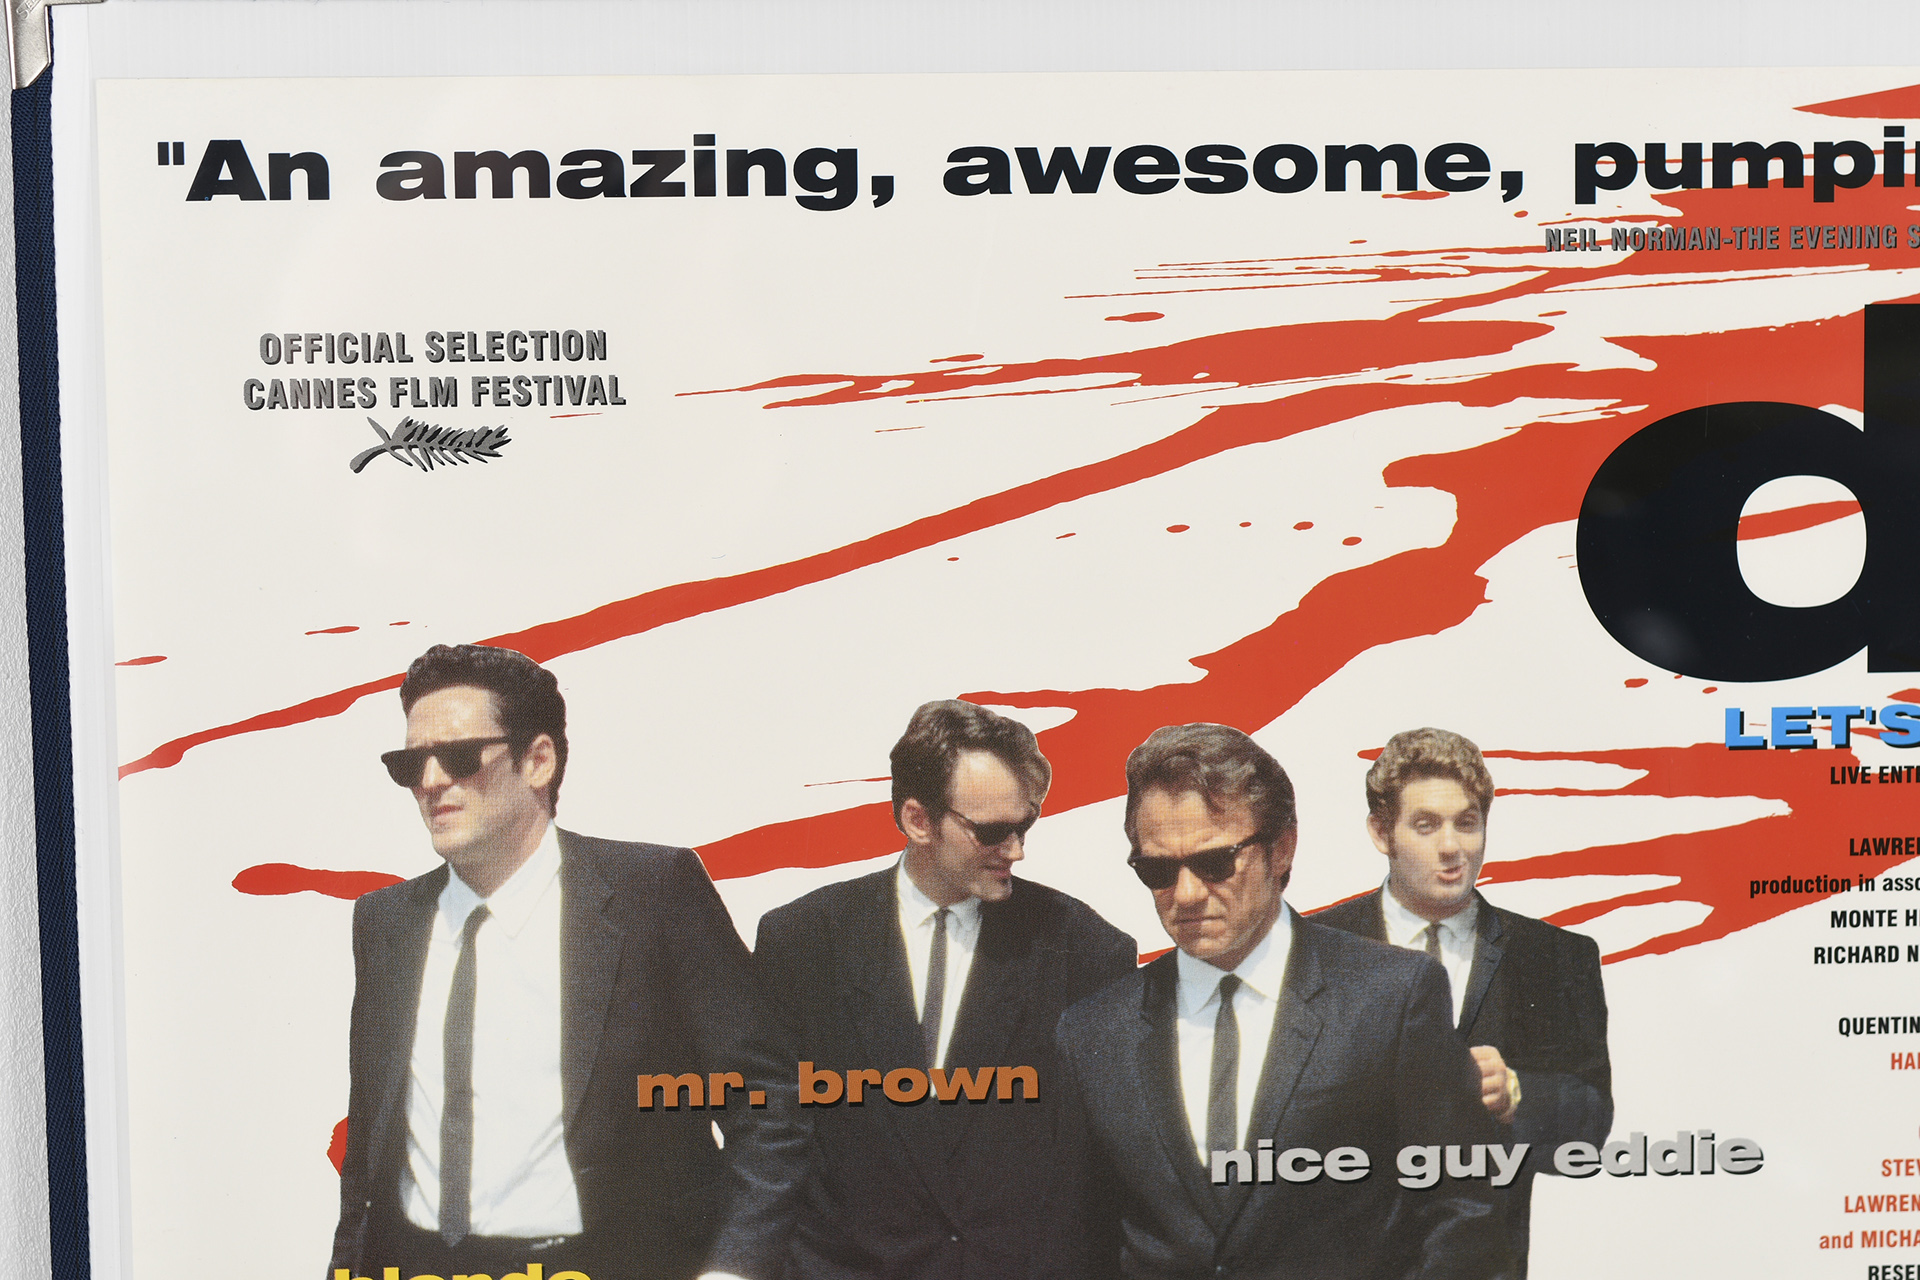 Original Cinema Poster "Reservoir Dogs"